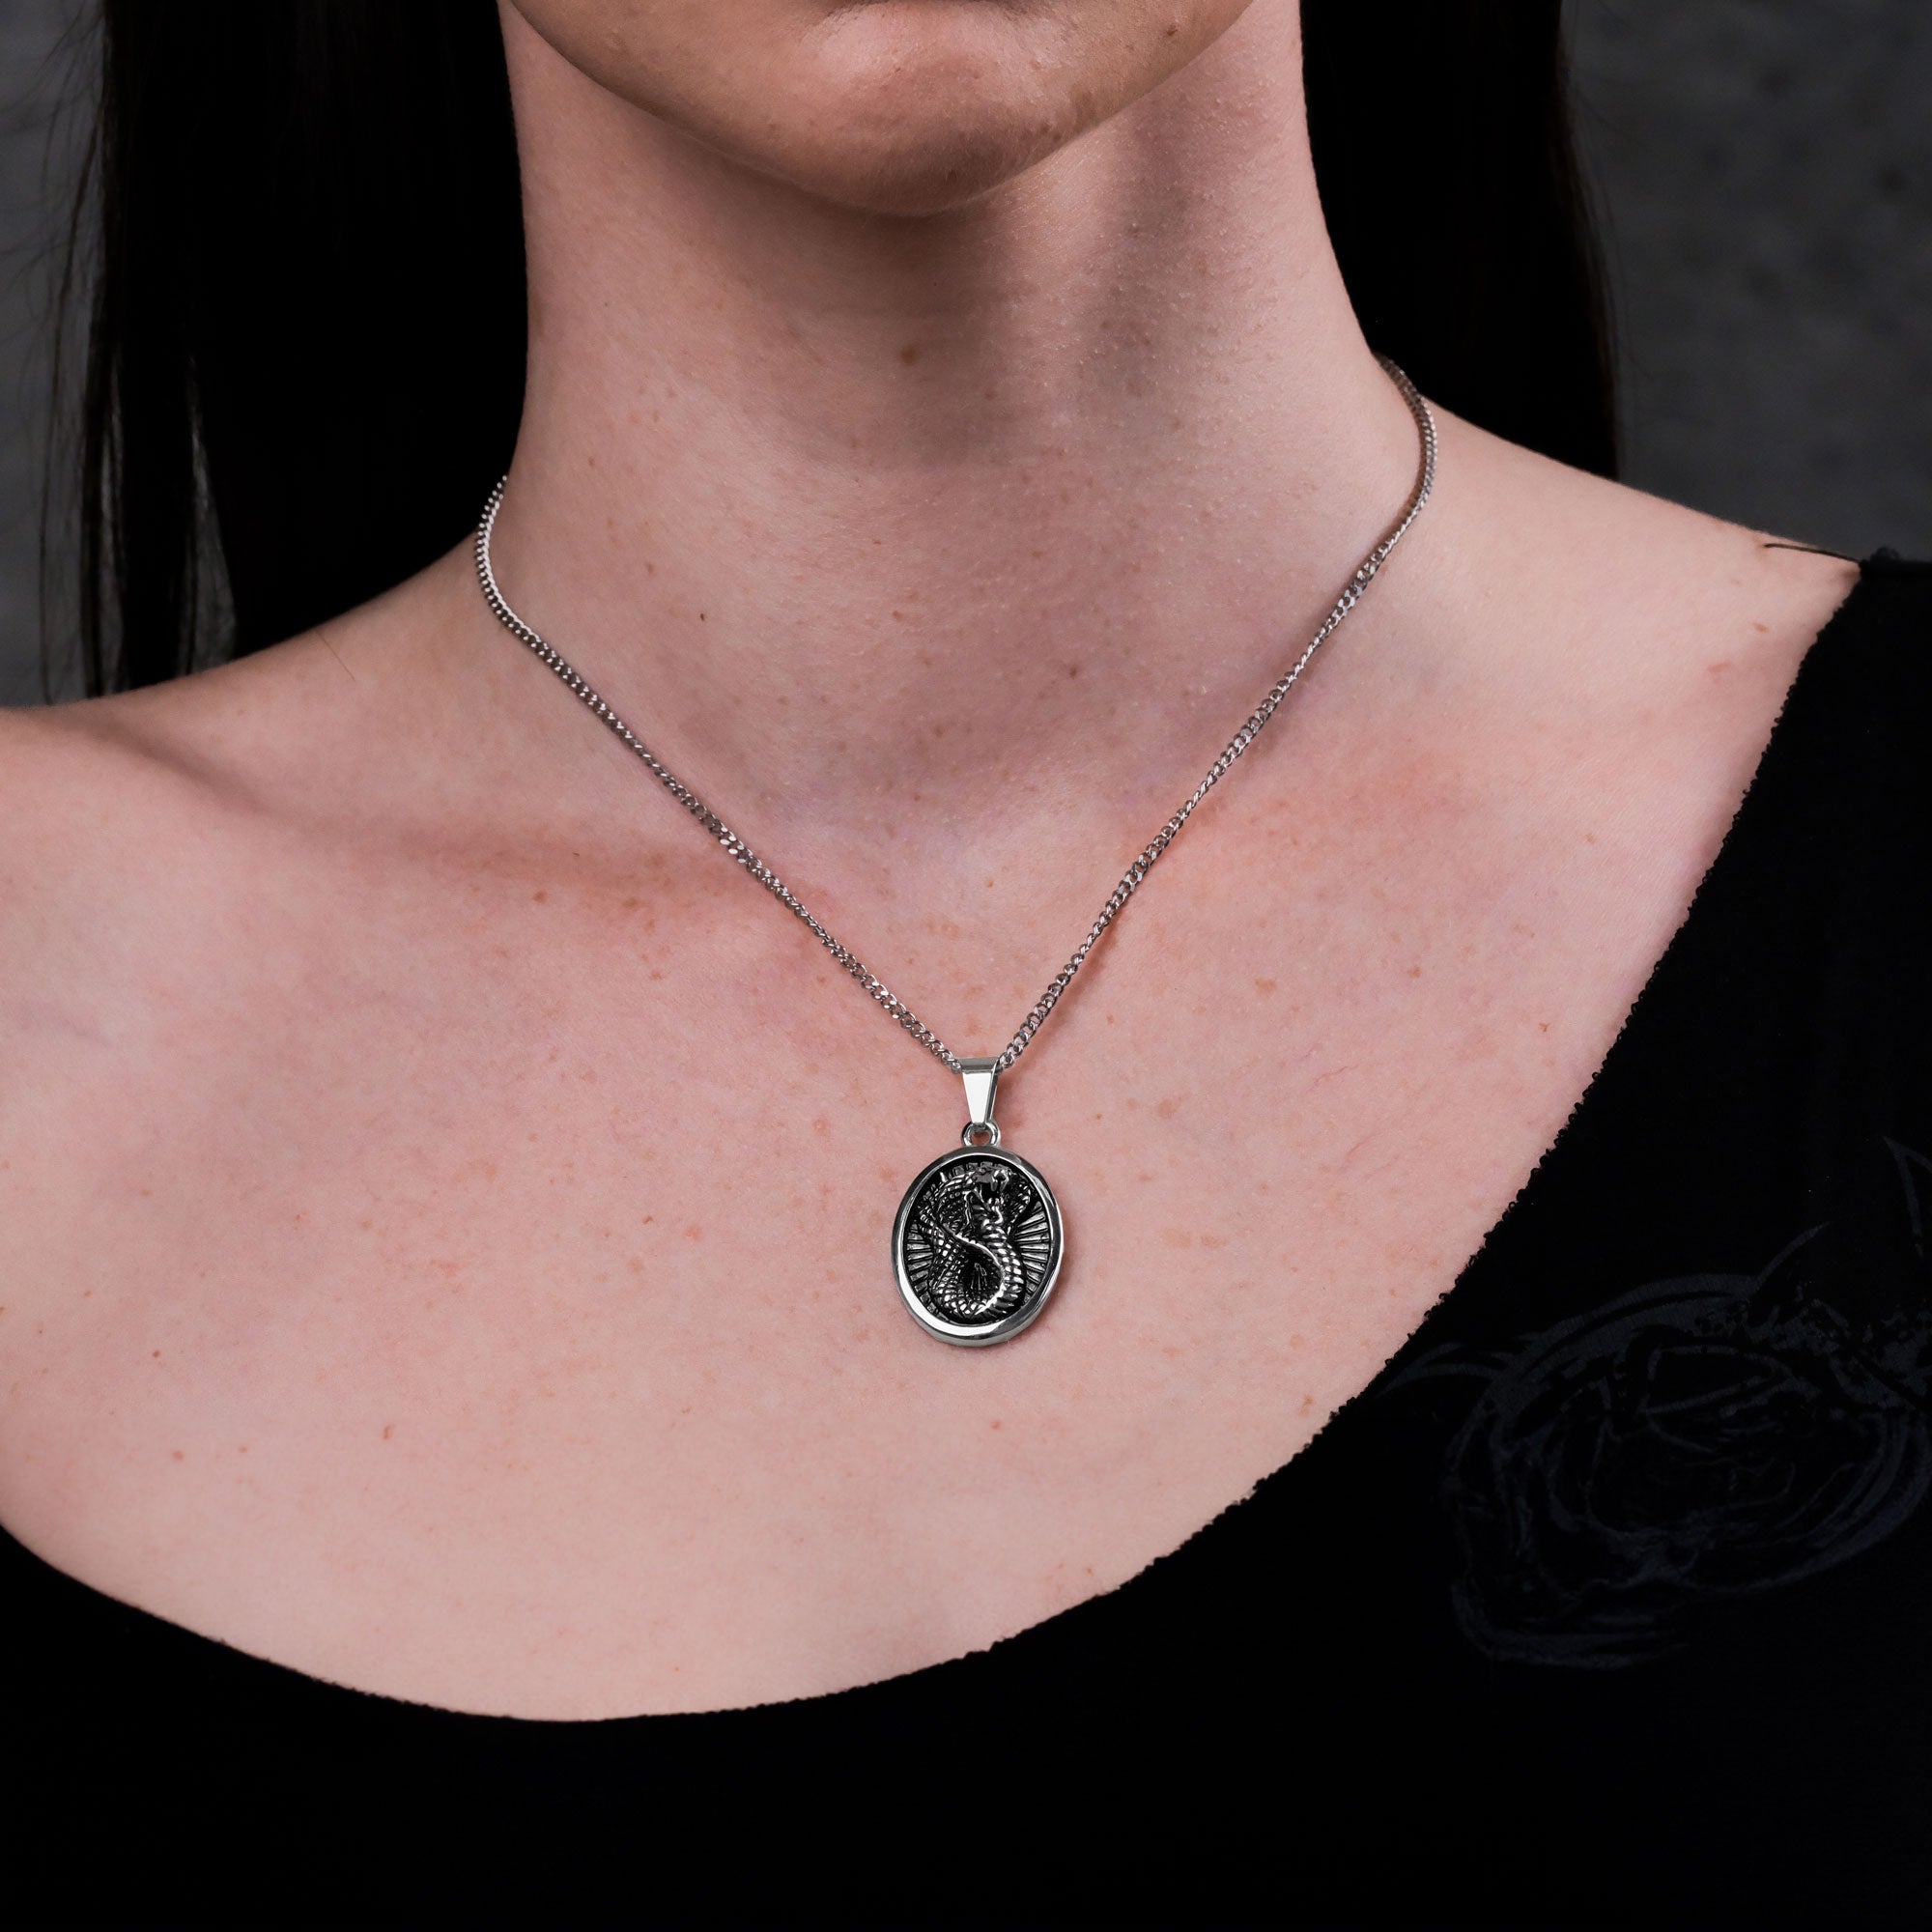 Women's snake charm necklace on body